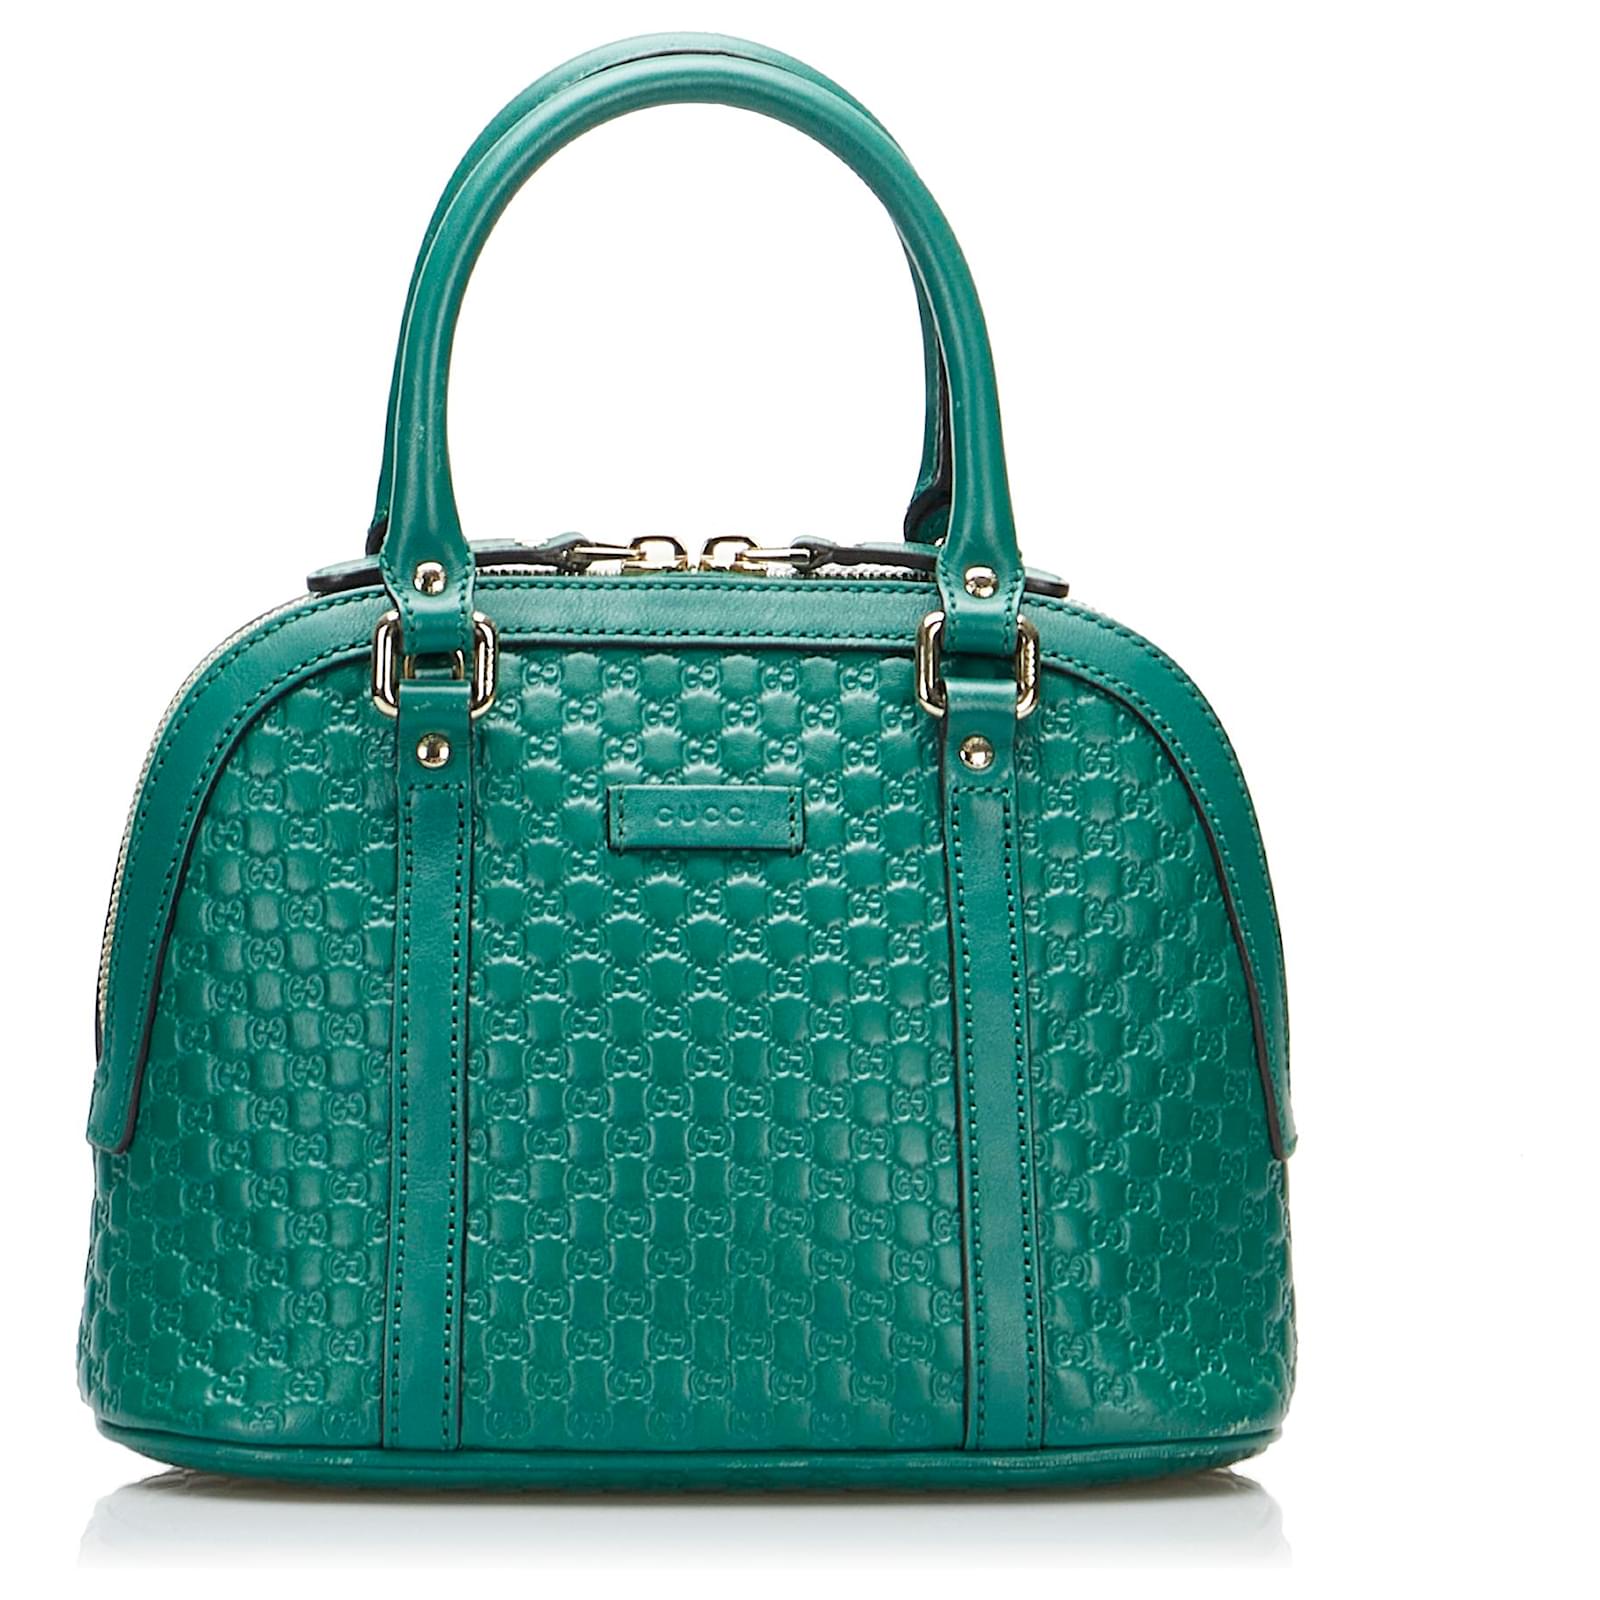 Gucci Leather Mini GG Guccissima Dome Satchel Pink Bag New